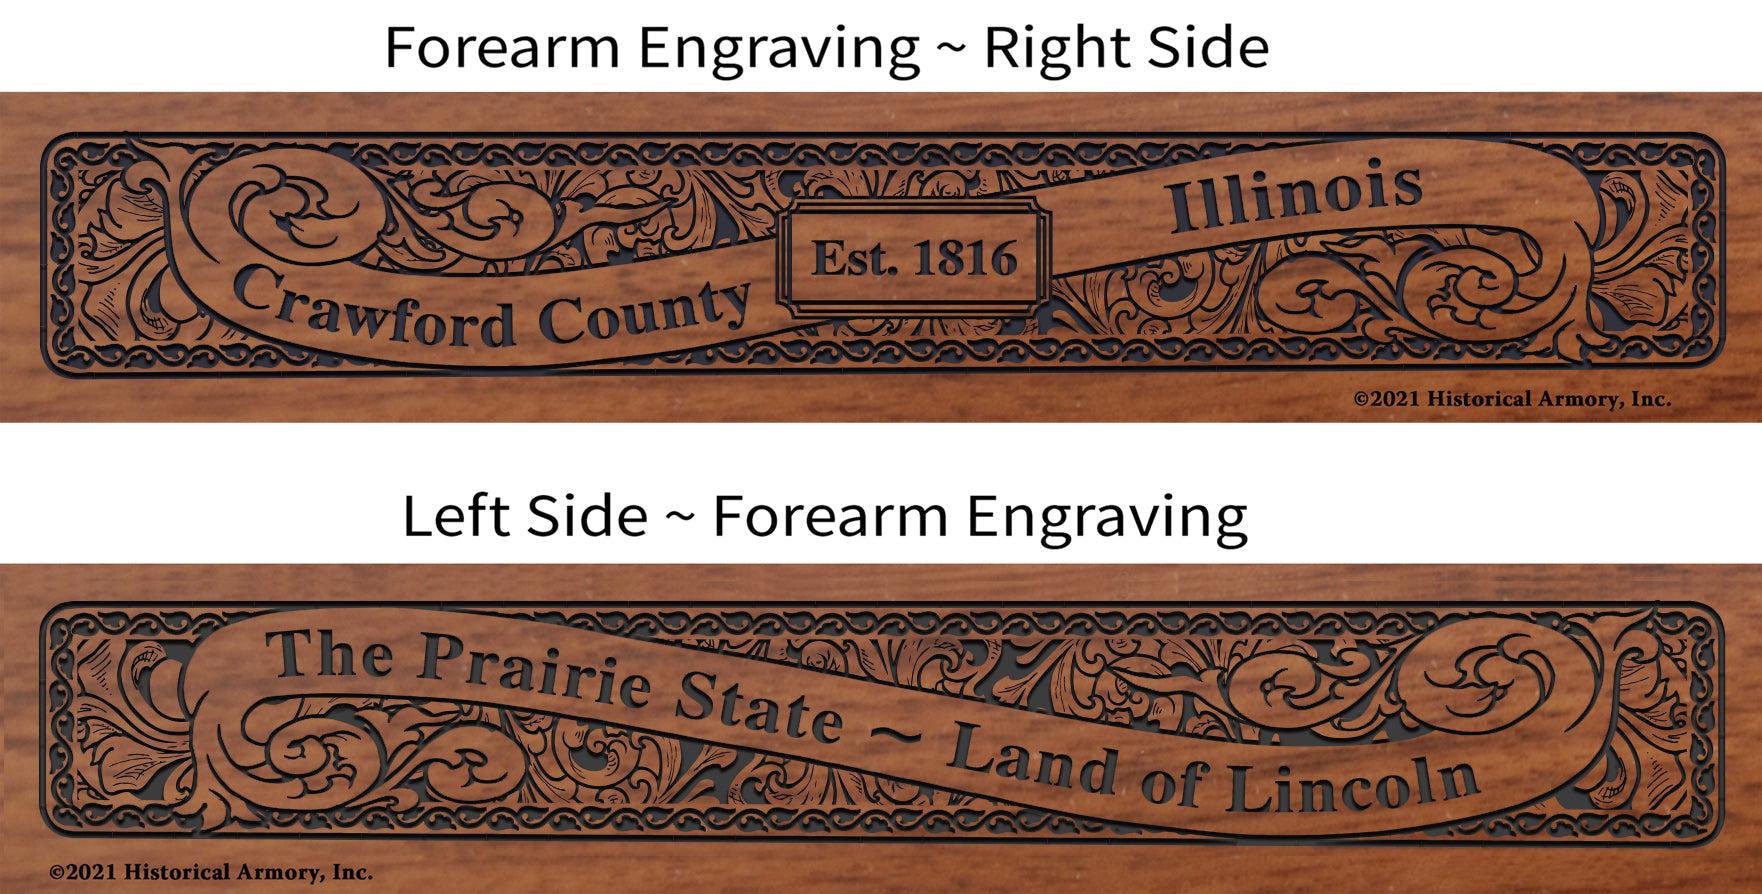 Crawford County Illinois Establishment and Motto History Engraved Rifle Forearm